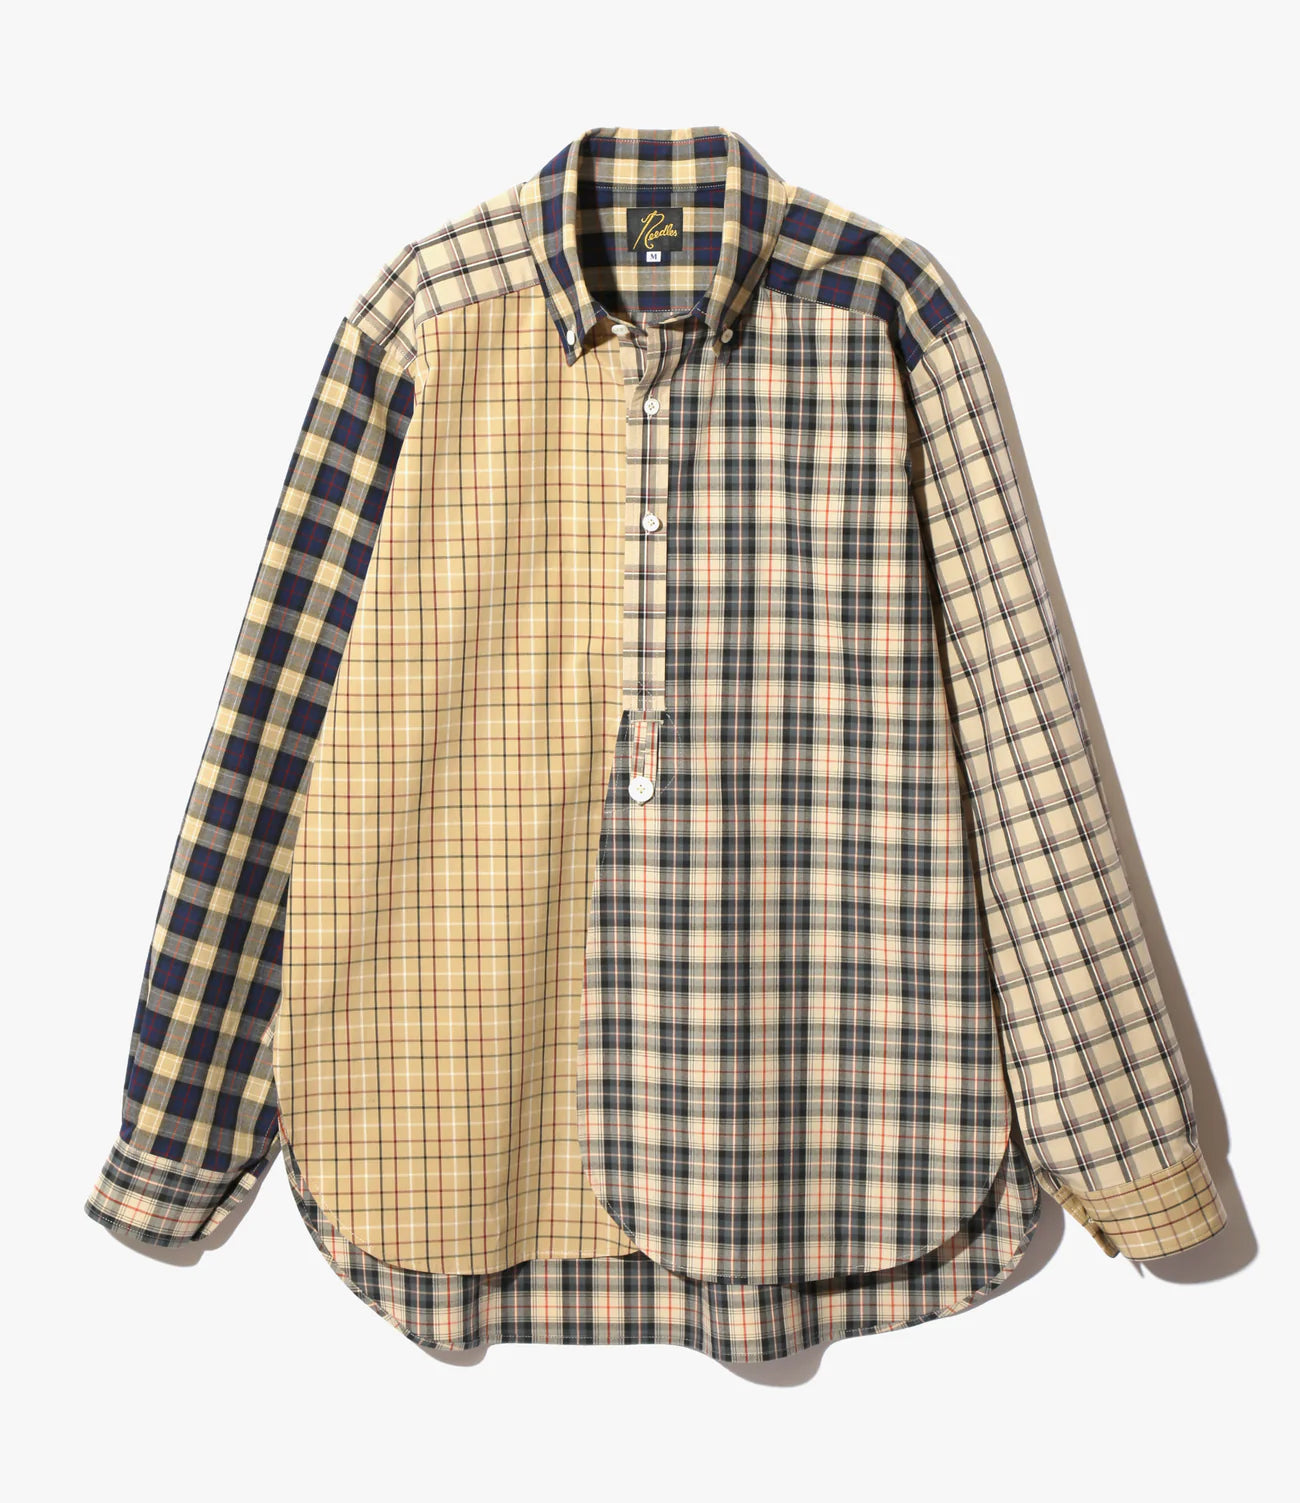 Needles B.D. EDW Shirt - Cotton Plaid Cloth / Crazy - Khaki